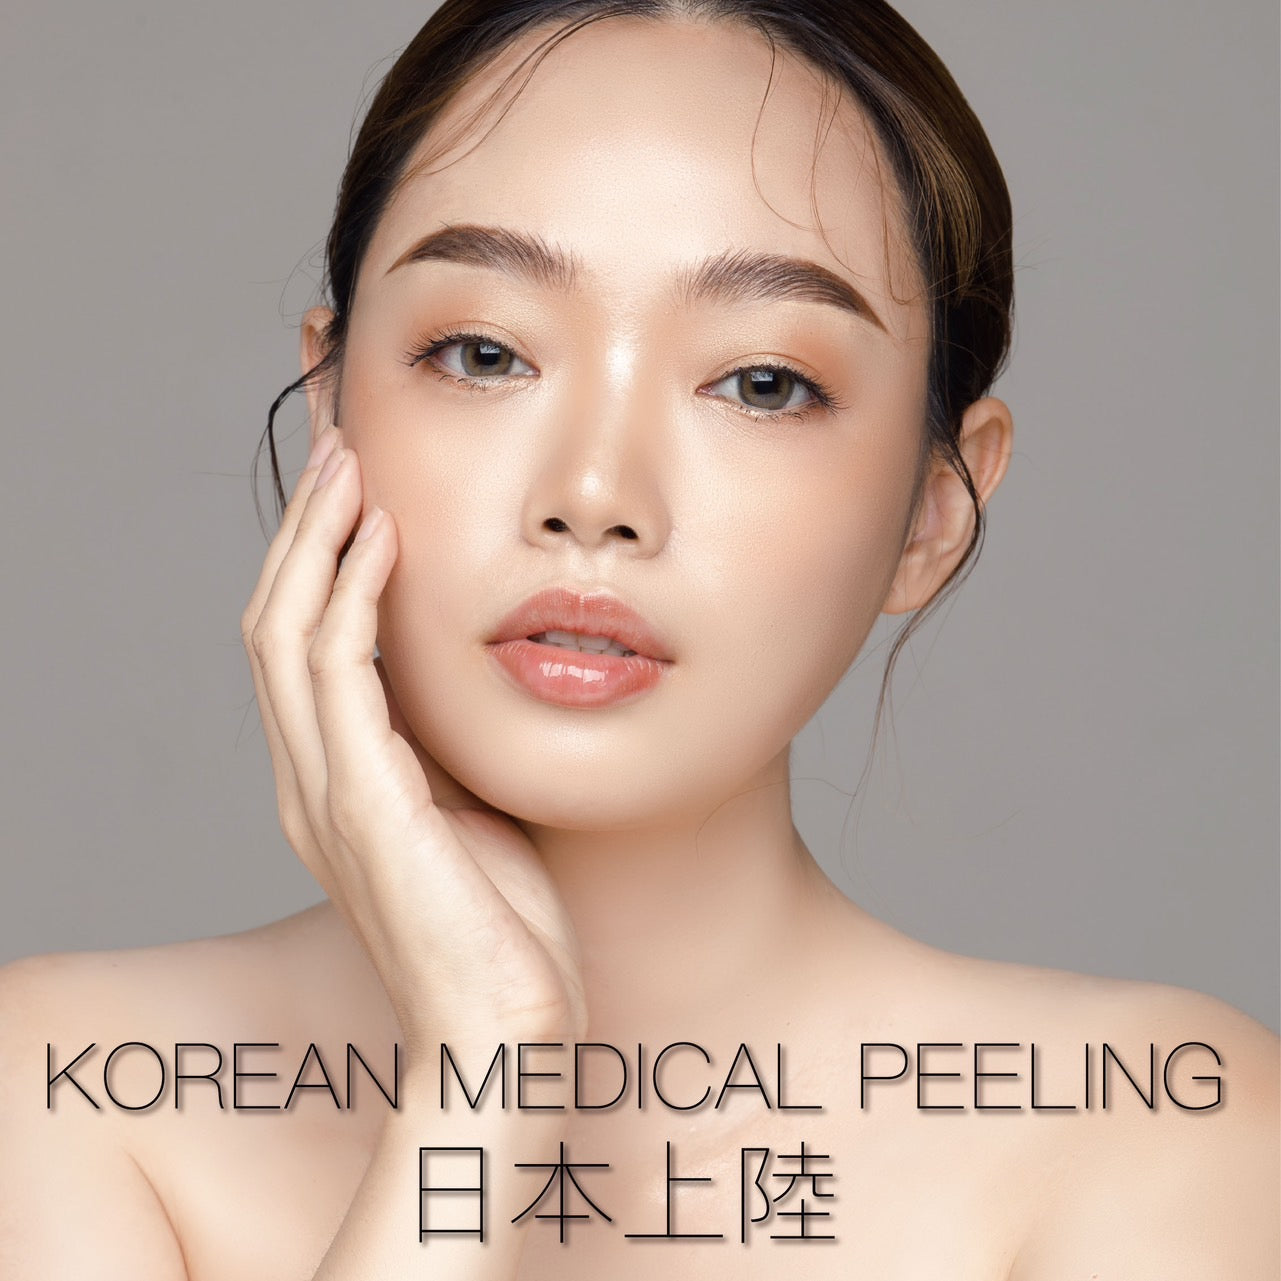 Korean medical peeling